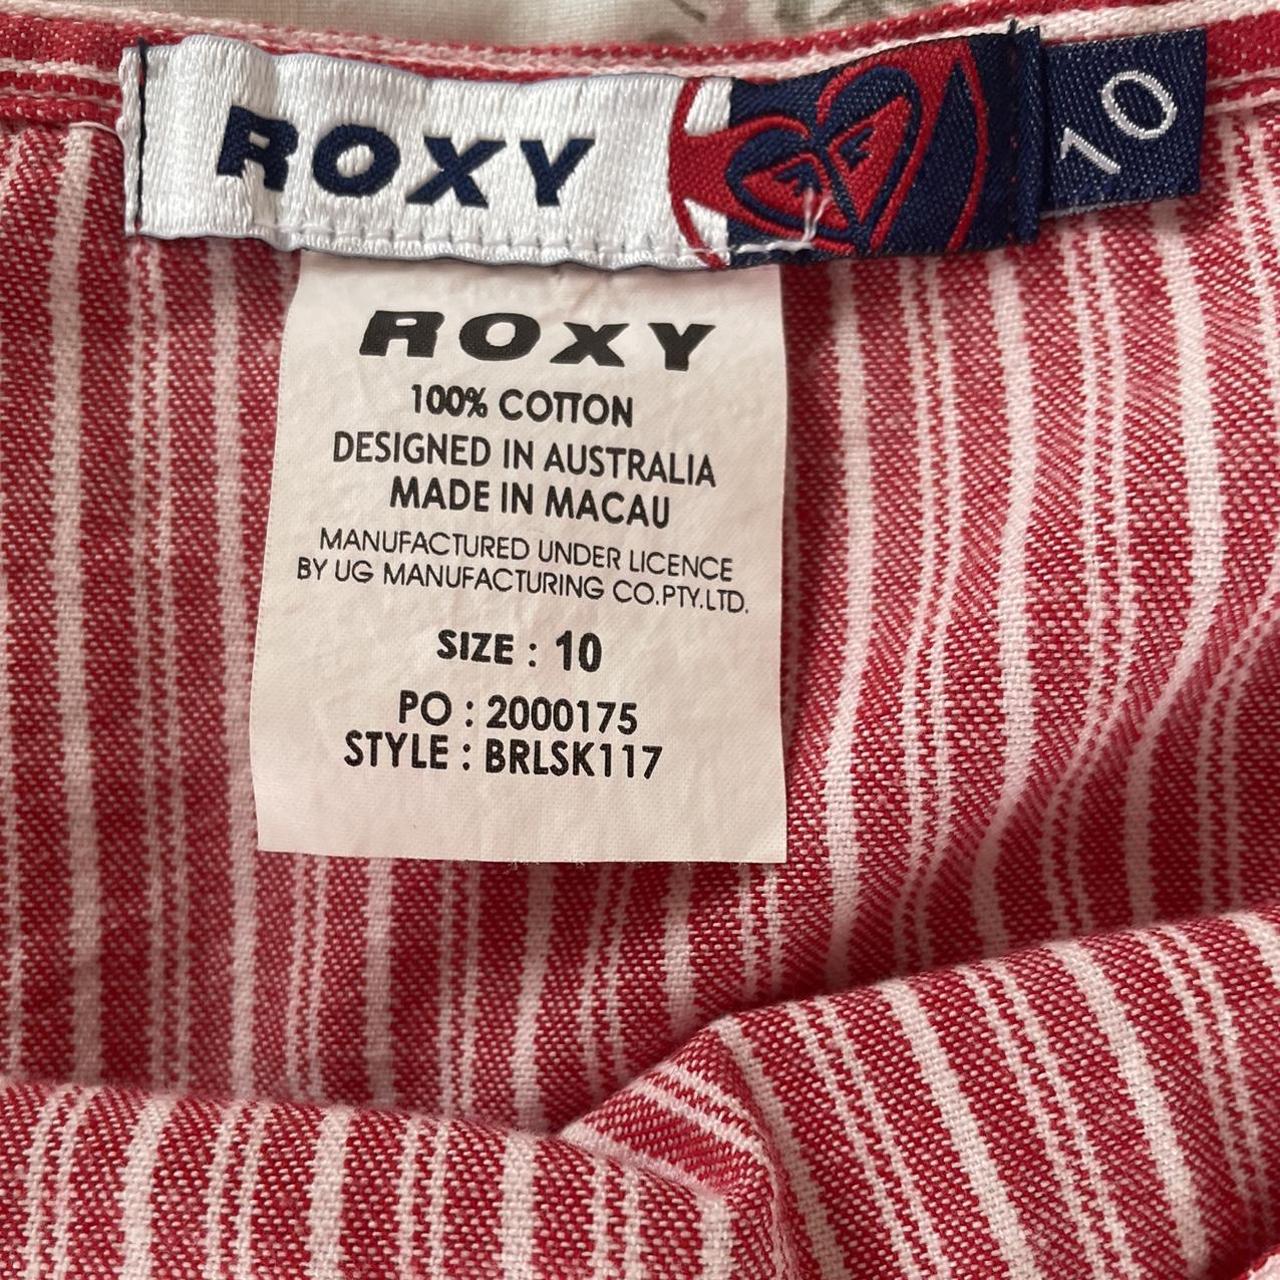 Roxy! Red and white pinstripe mini skirt 100% cotton - Depop